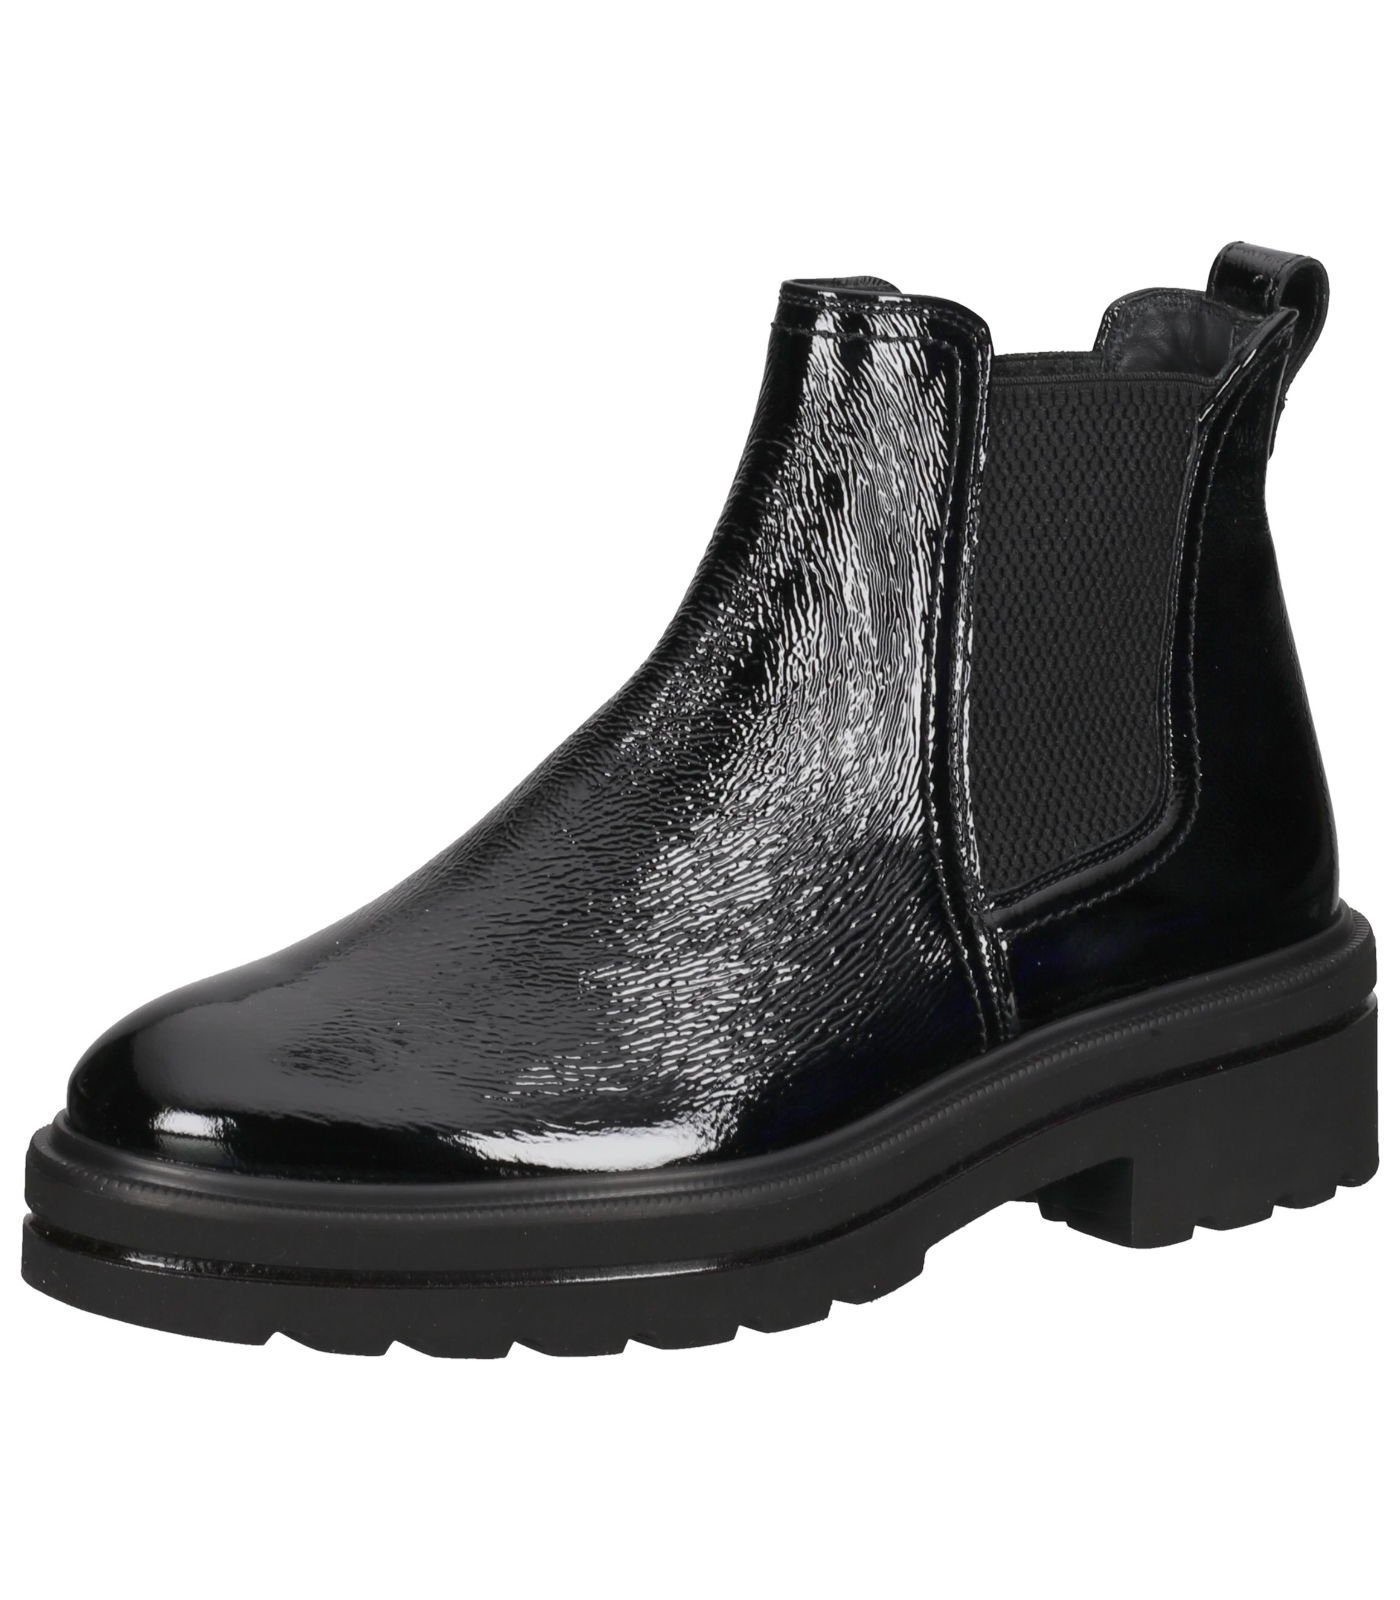 Paul Green »Stiefelette Leder« Ankleboots kaufen | OTTO